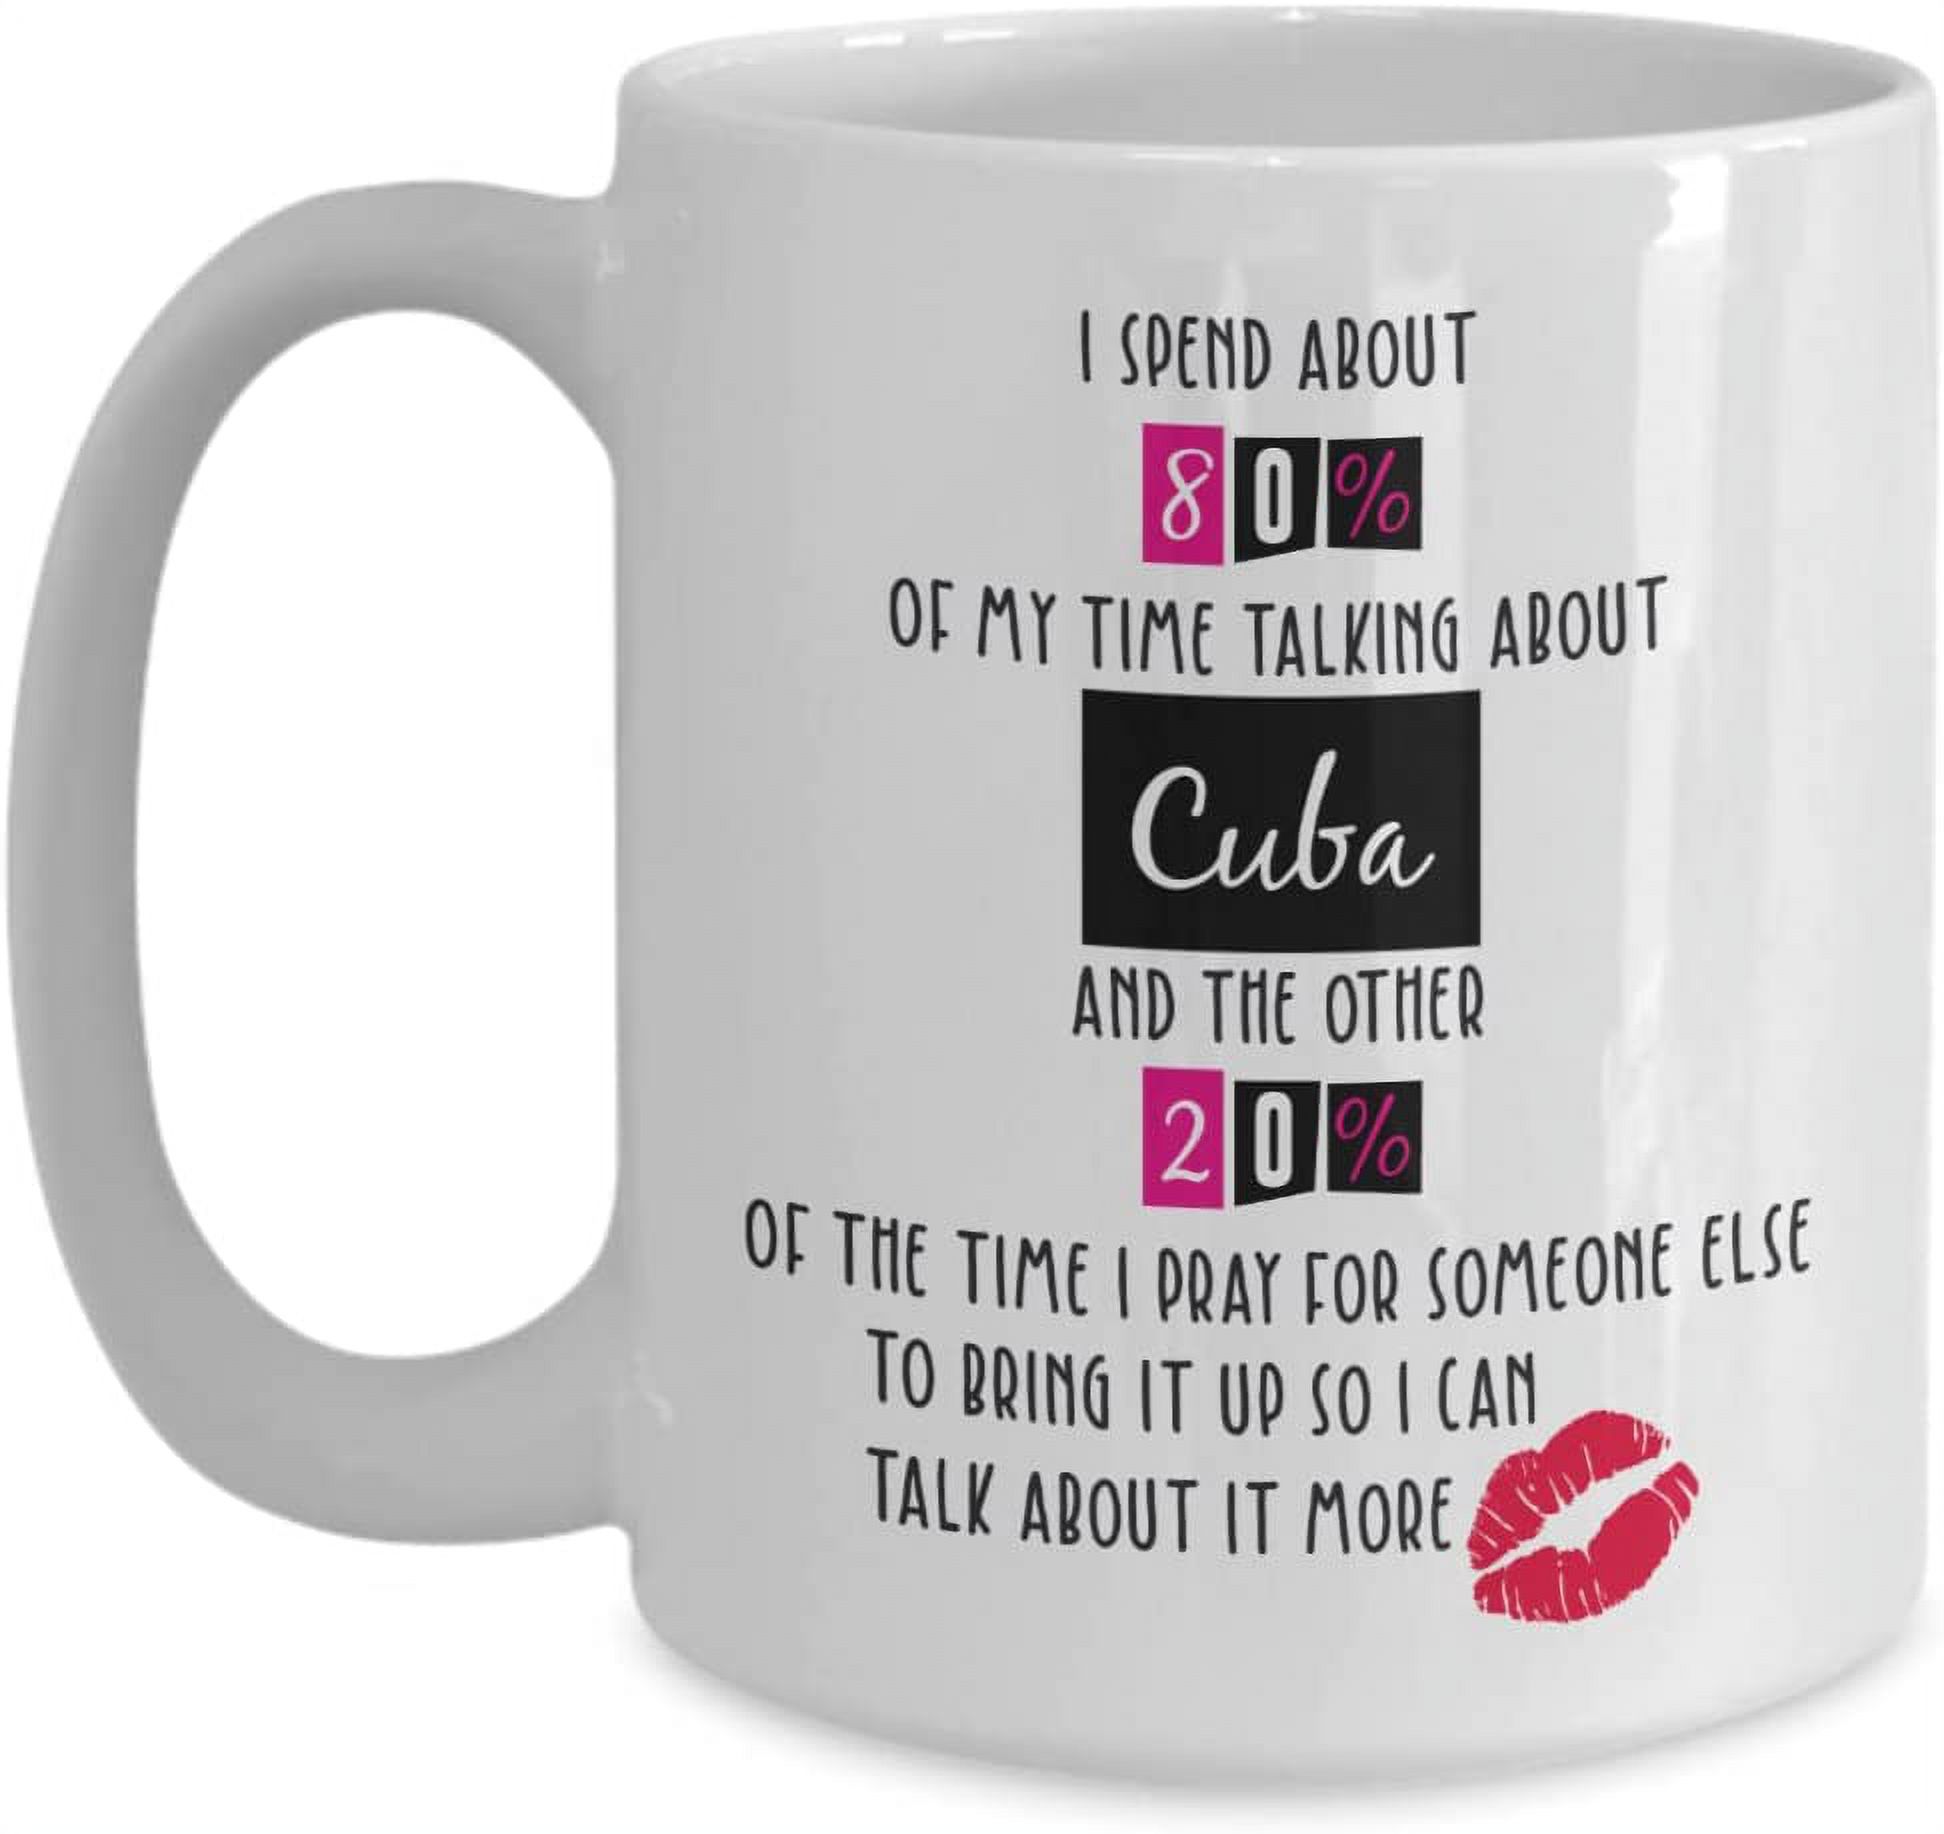 Cuba Coffee Mug, Cuba Gifts, Gifts For Cuba, Cuba Gifts For Man And Woman, Cuba Mug, Cuba Friend Gift, Birthday Christmas Basket gag Gift Idea - image 1 of 3